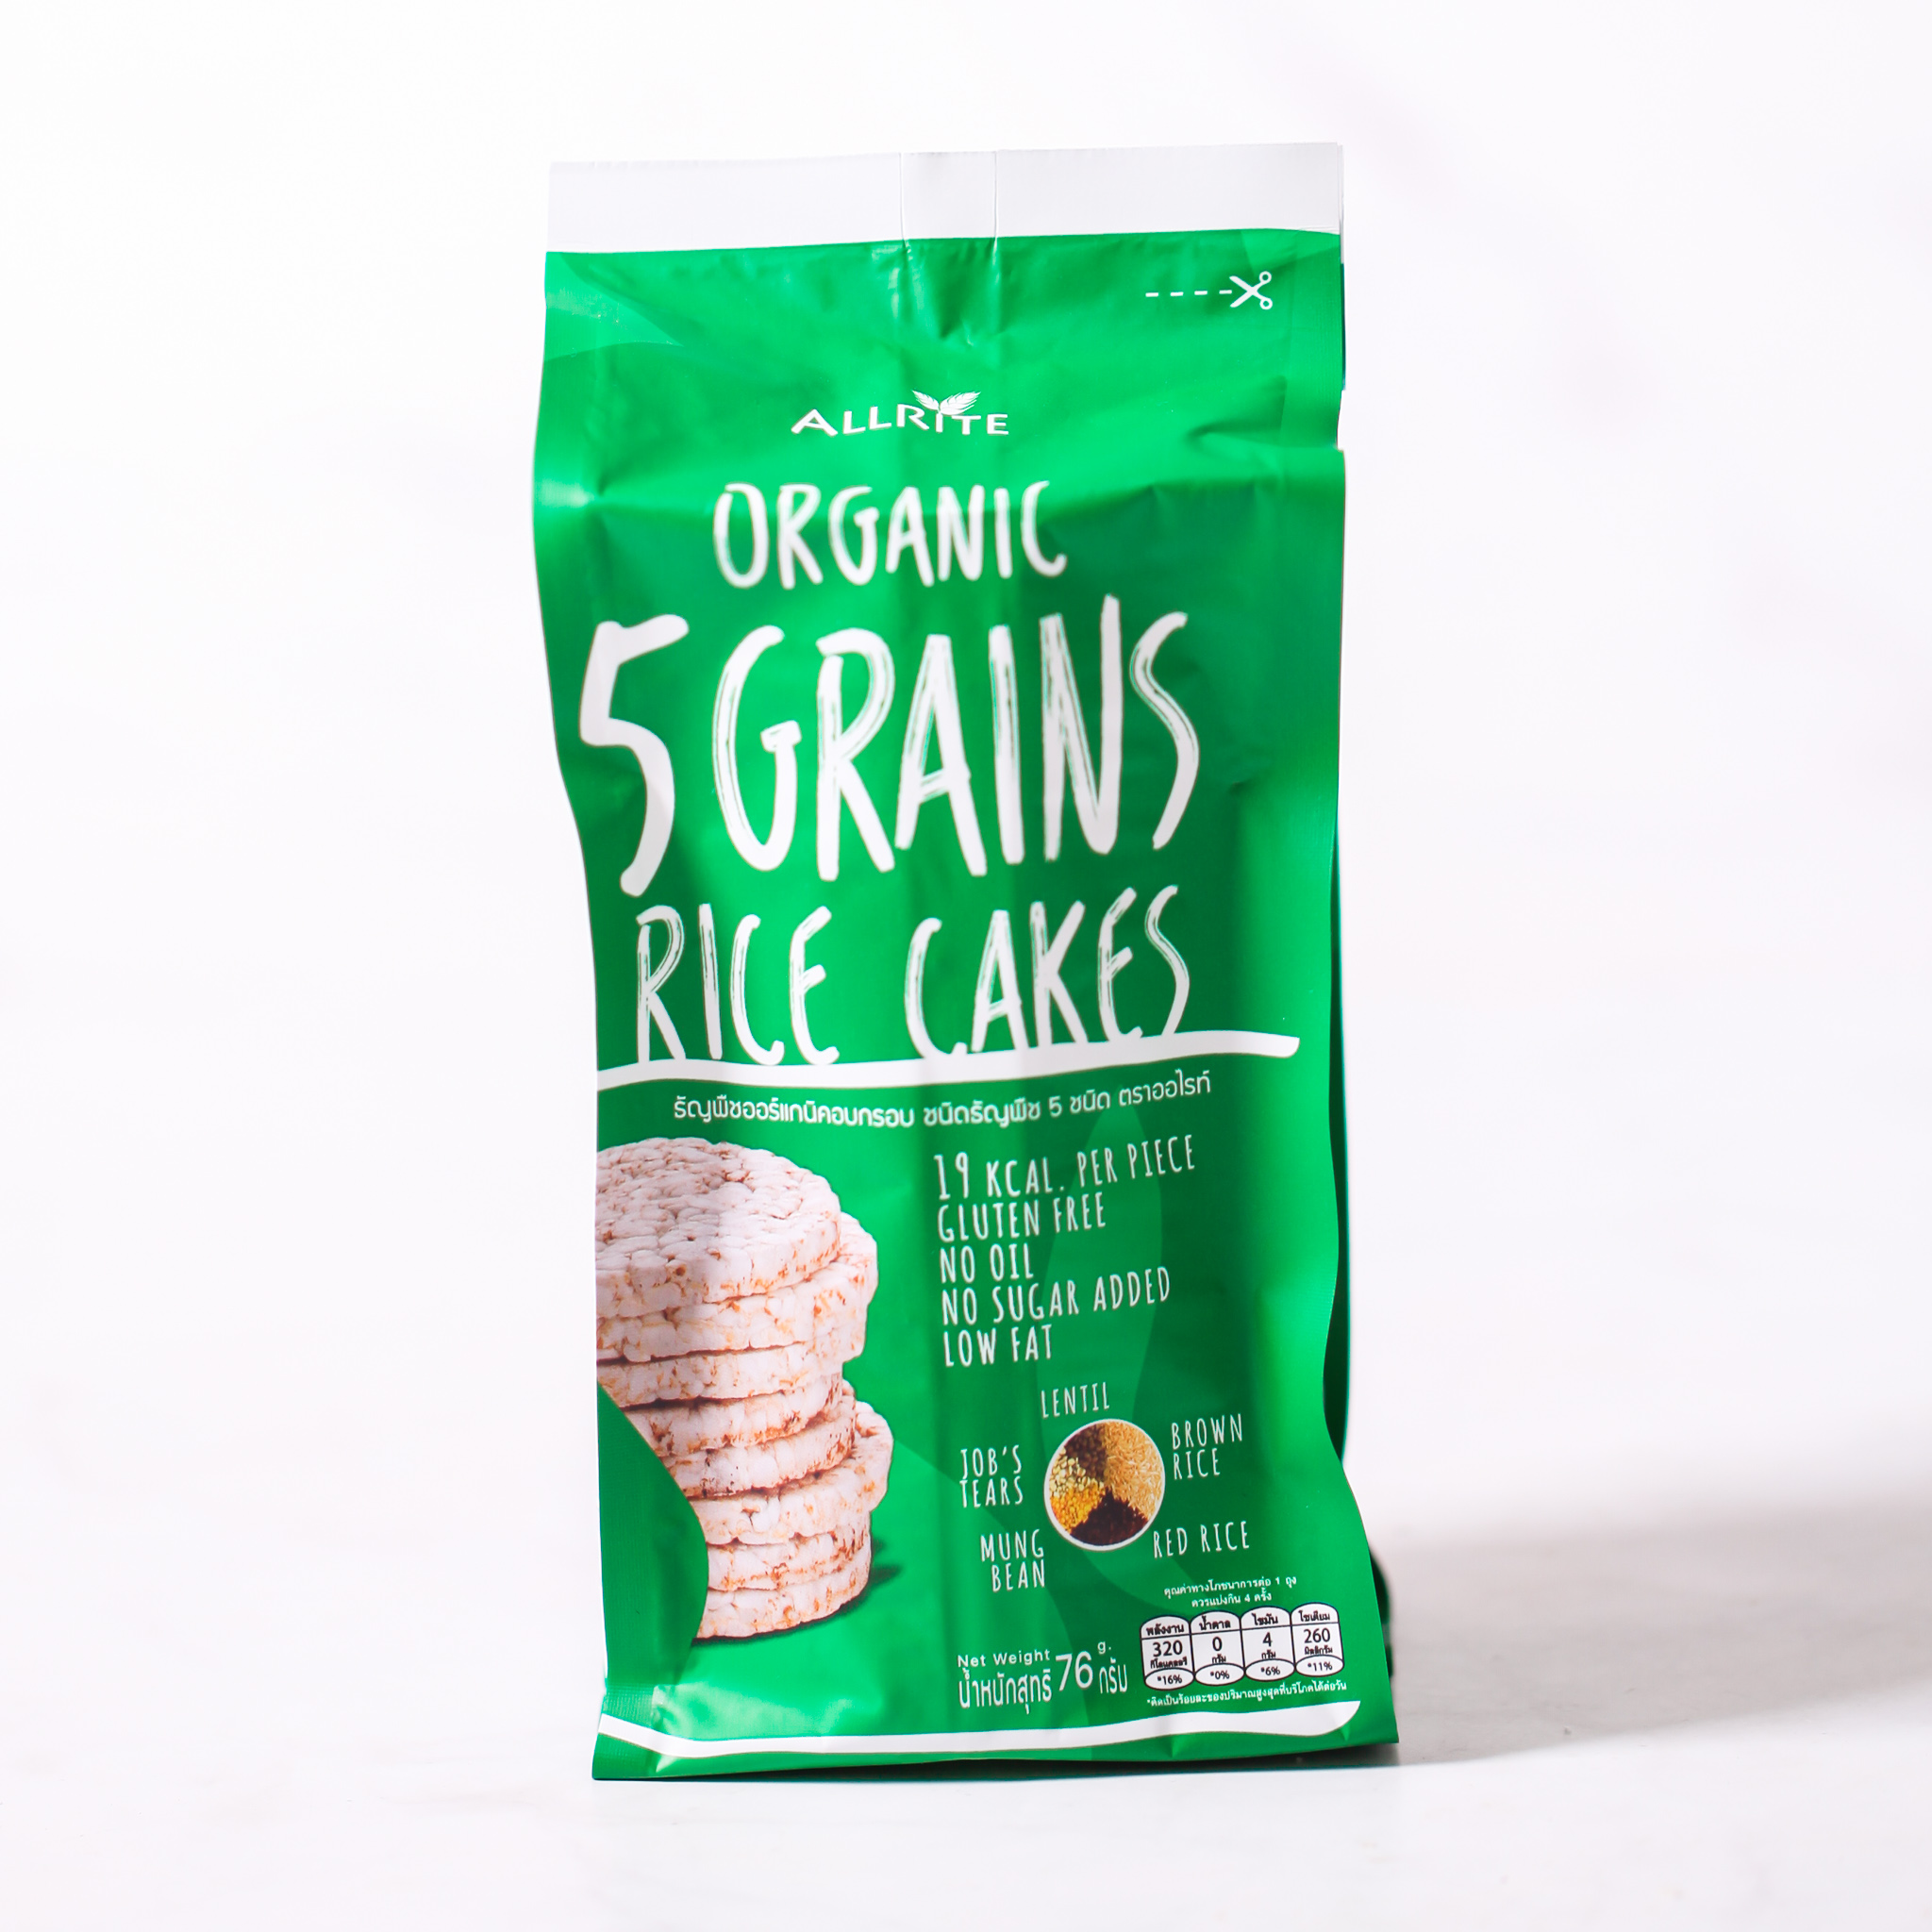 ALLRITE Organic Rice Cakes 5 Grains